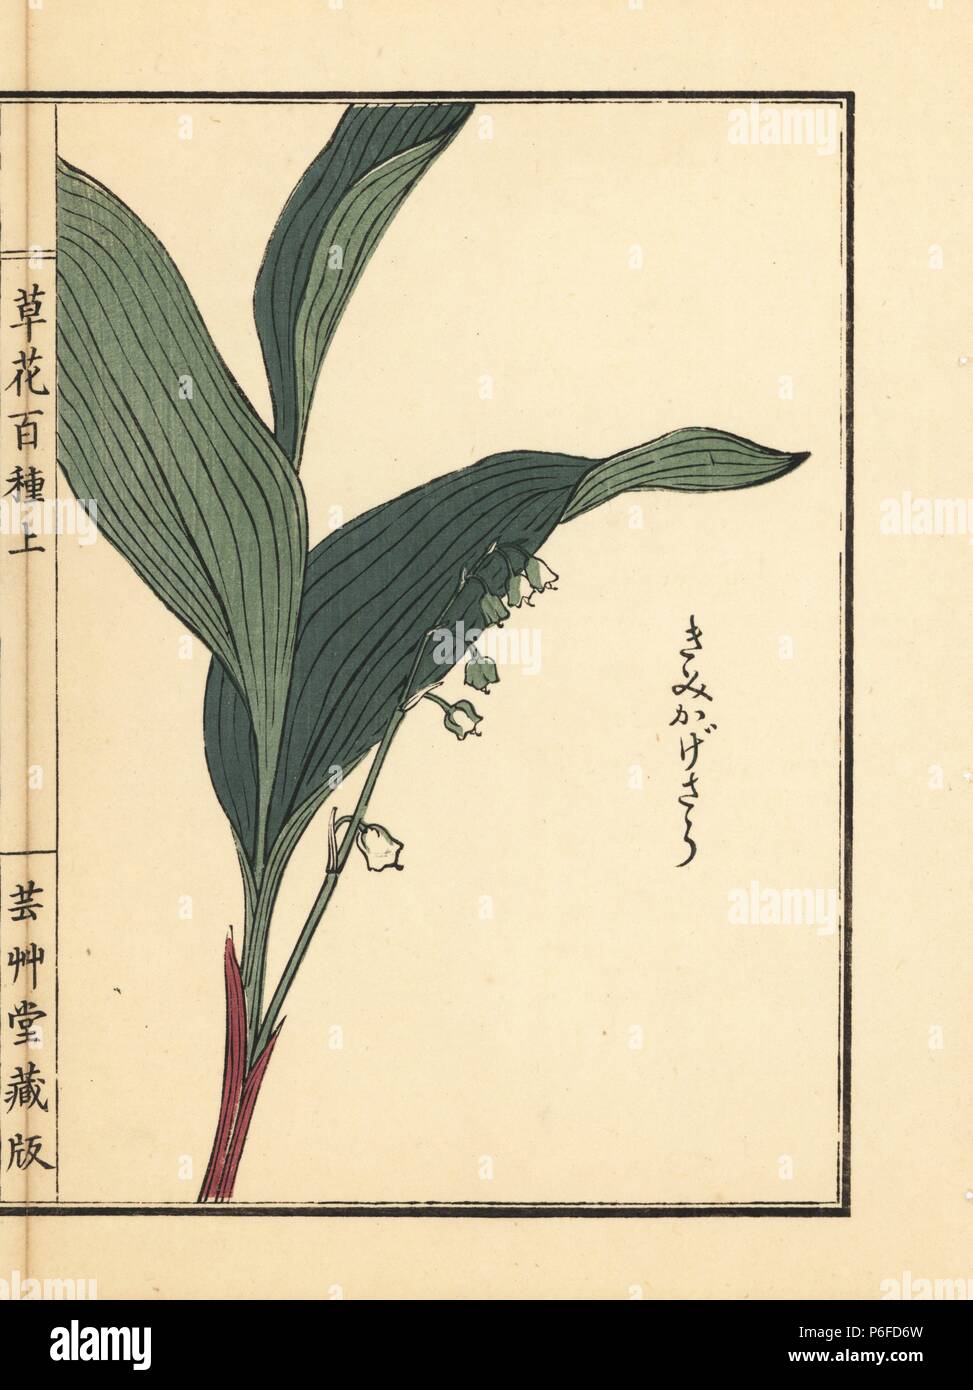 Kimikagesou, suzuran or lily of the valley, Convallaria majalis. Handcoloured woodblock print by Kono Bairei from Kusa Bana Hyakushu (One Hundred Varieties of Flowers), Tokyo, Yamada, 1901. Stock Photo